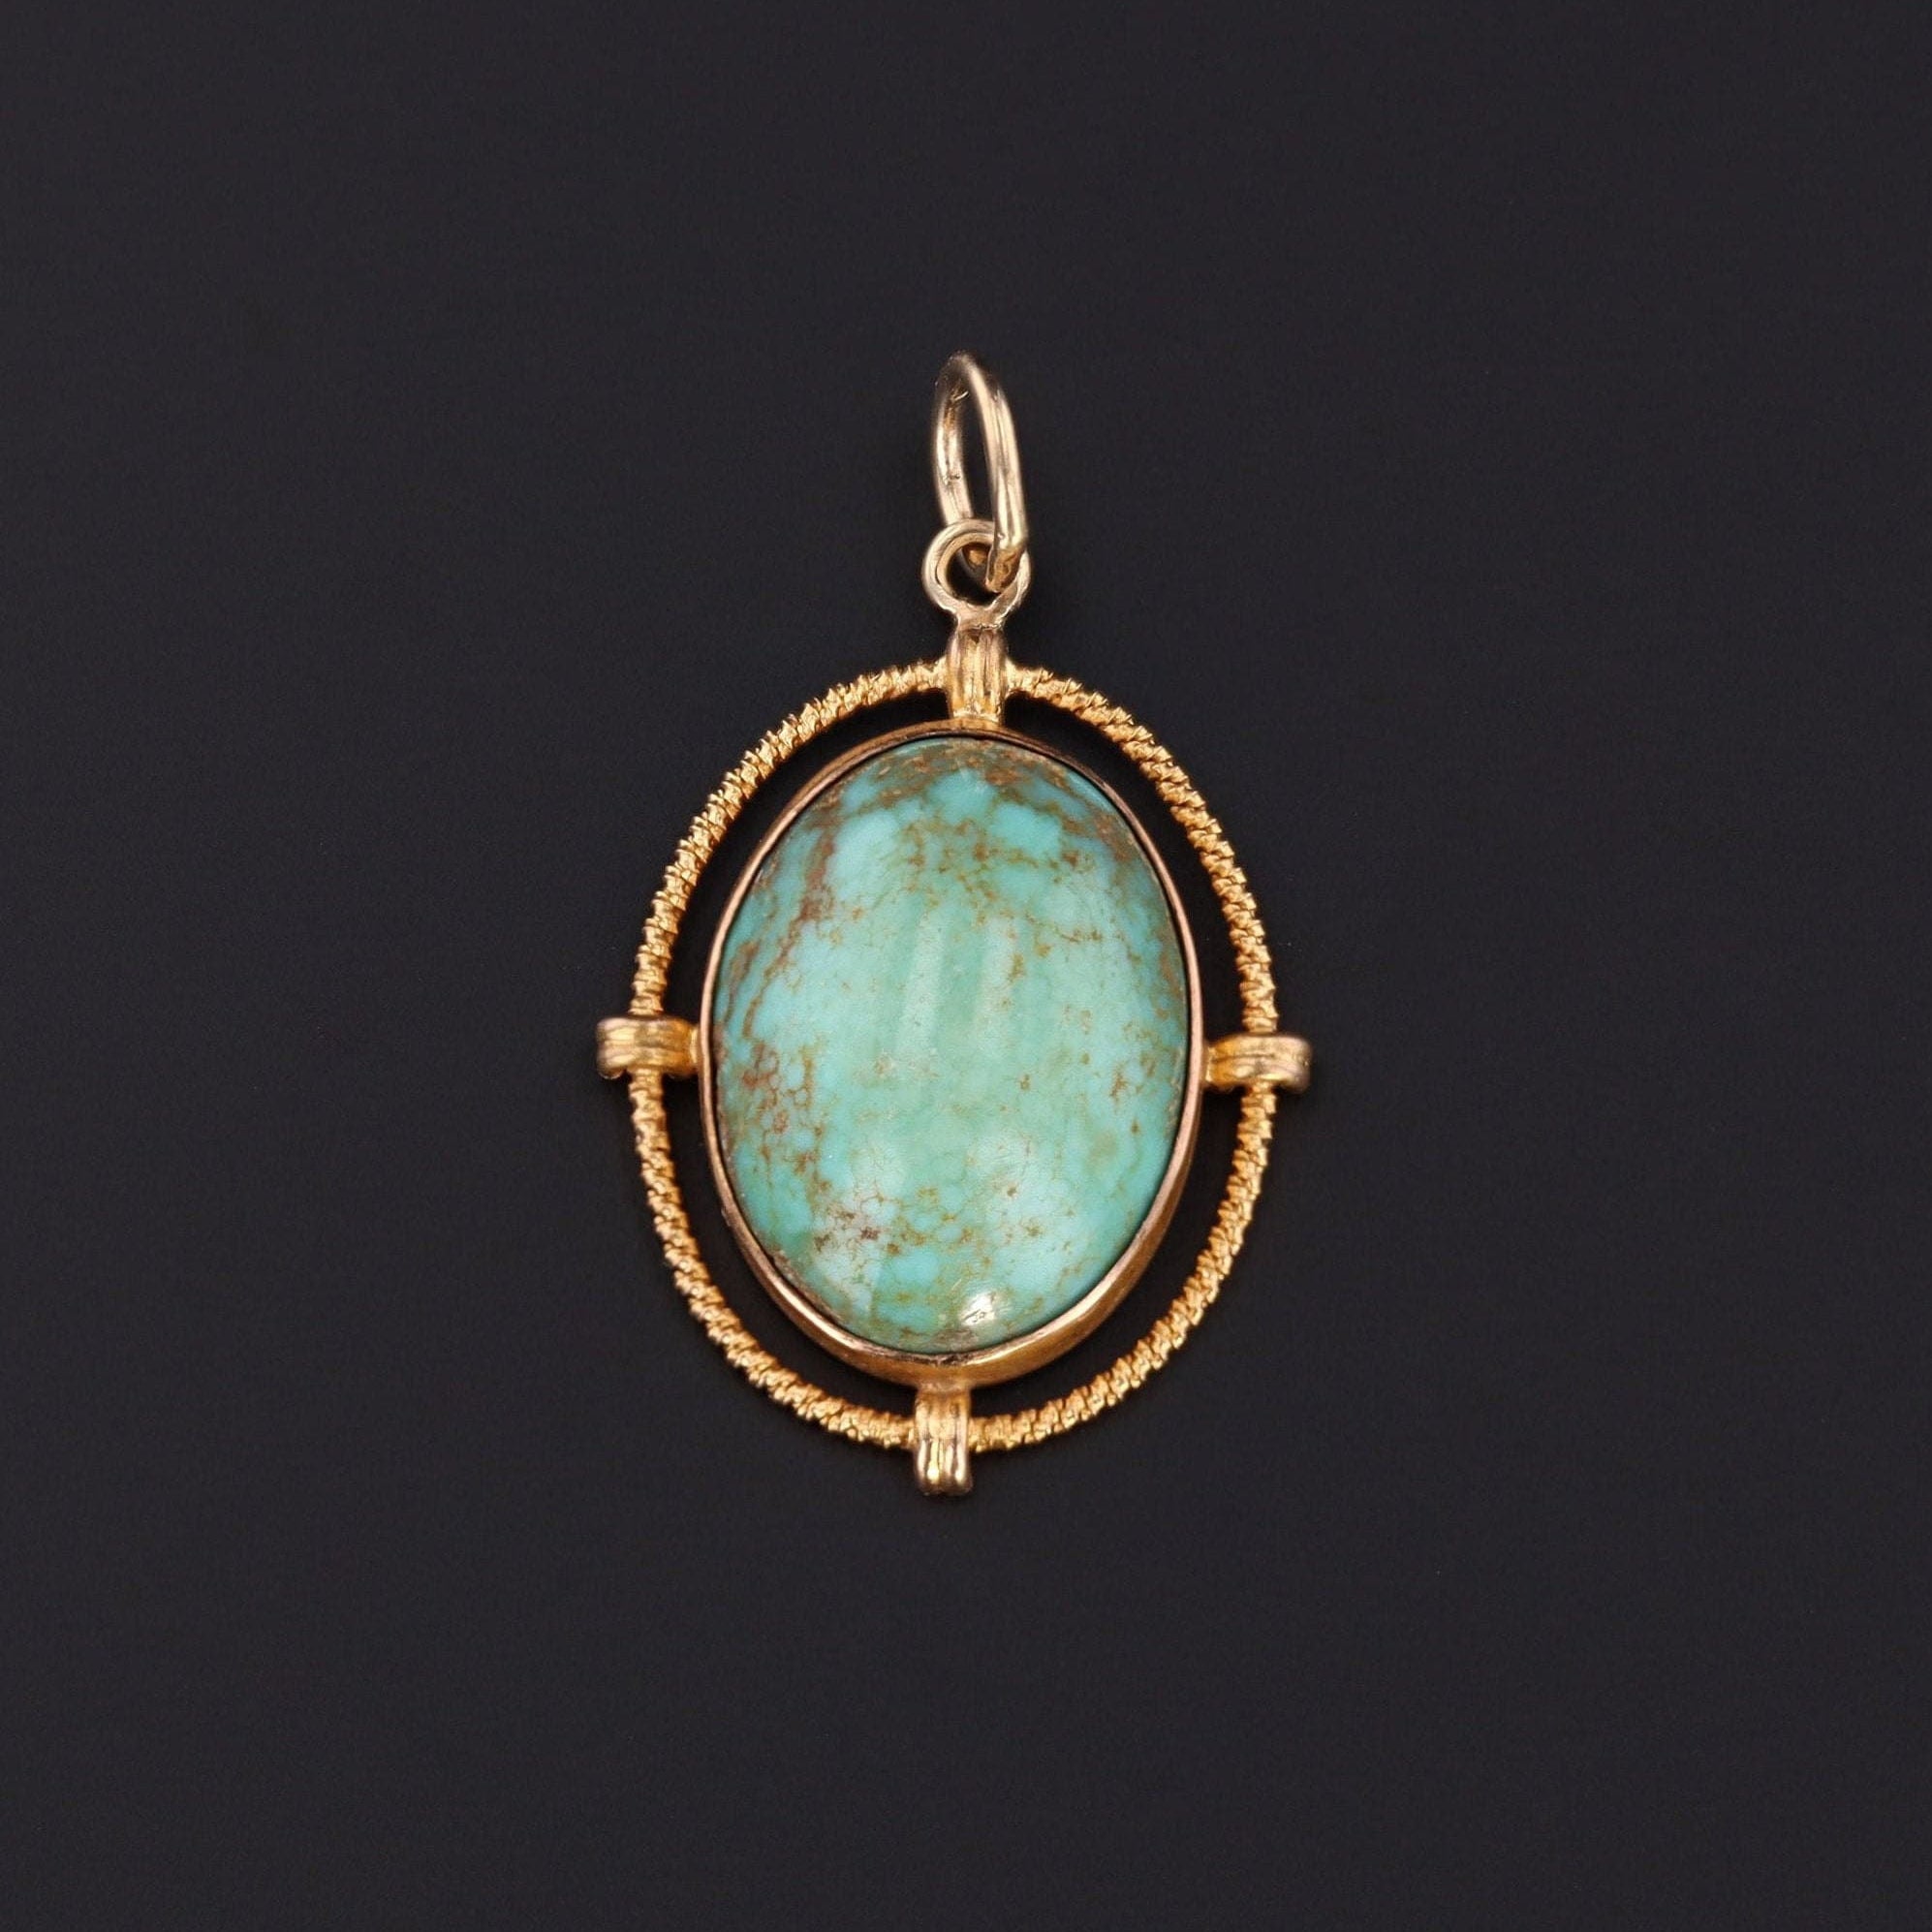 Antique Turquoise Charm | Antique Pin Conversion 